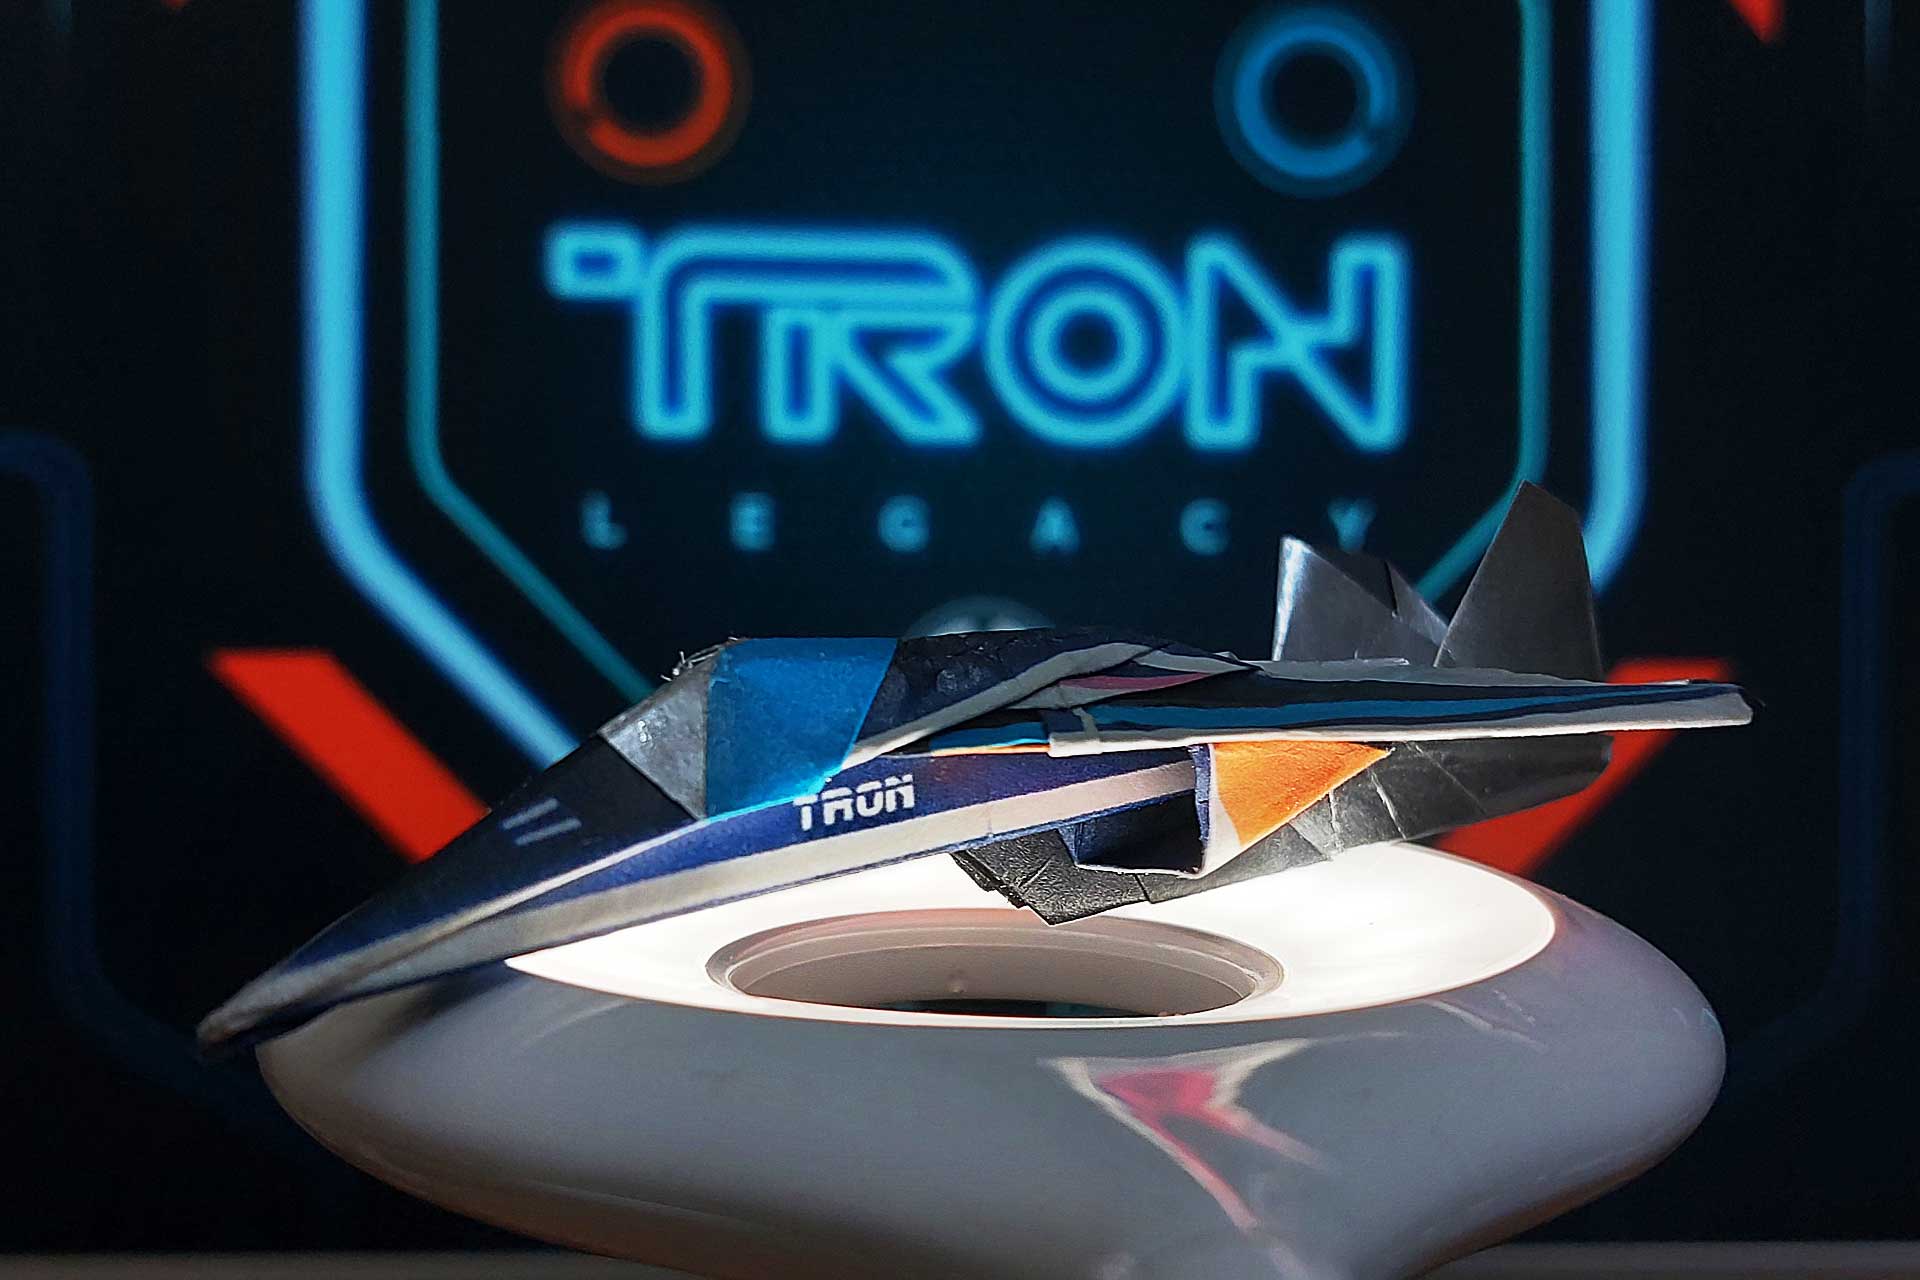 TRON - Lightjet